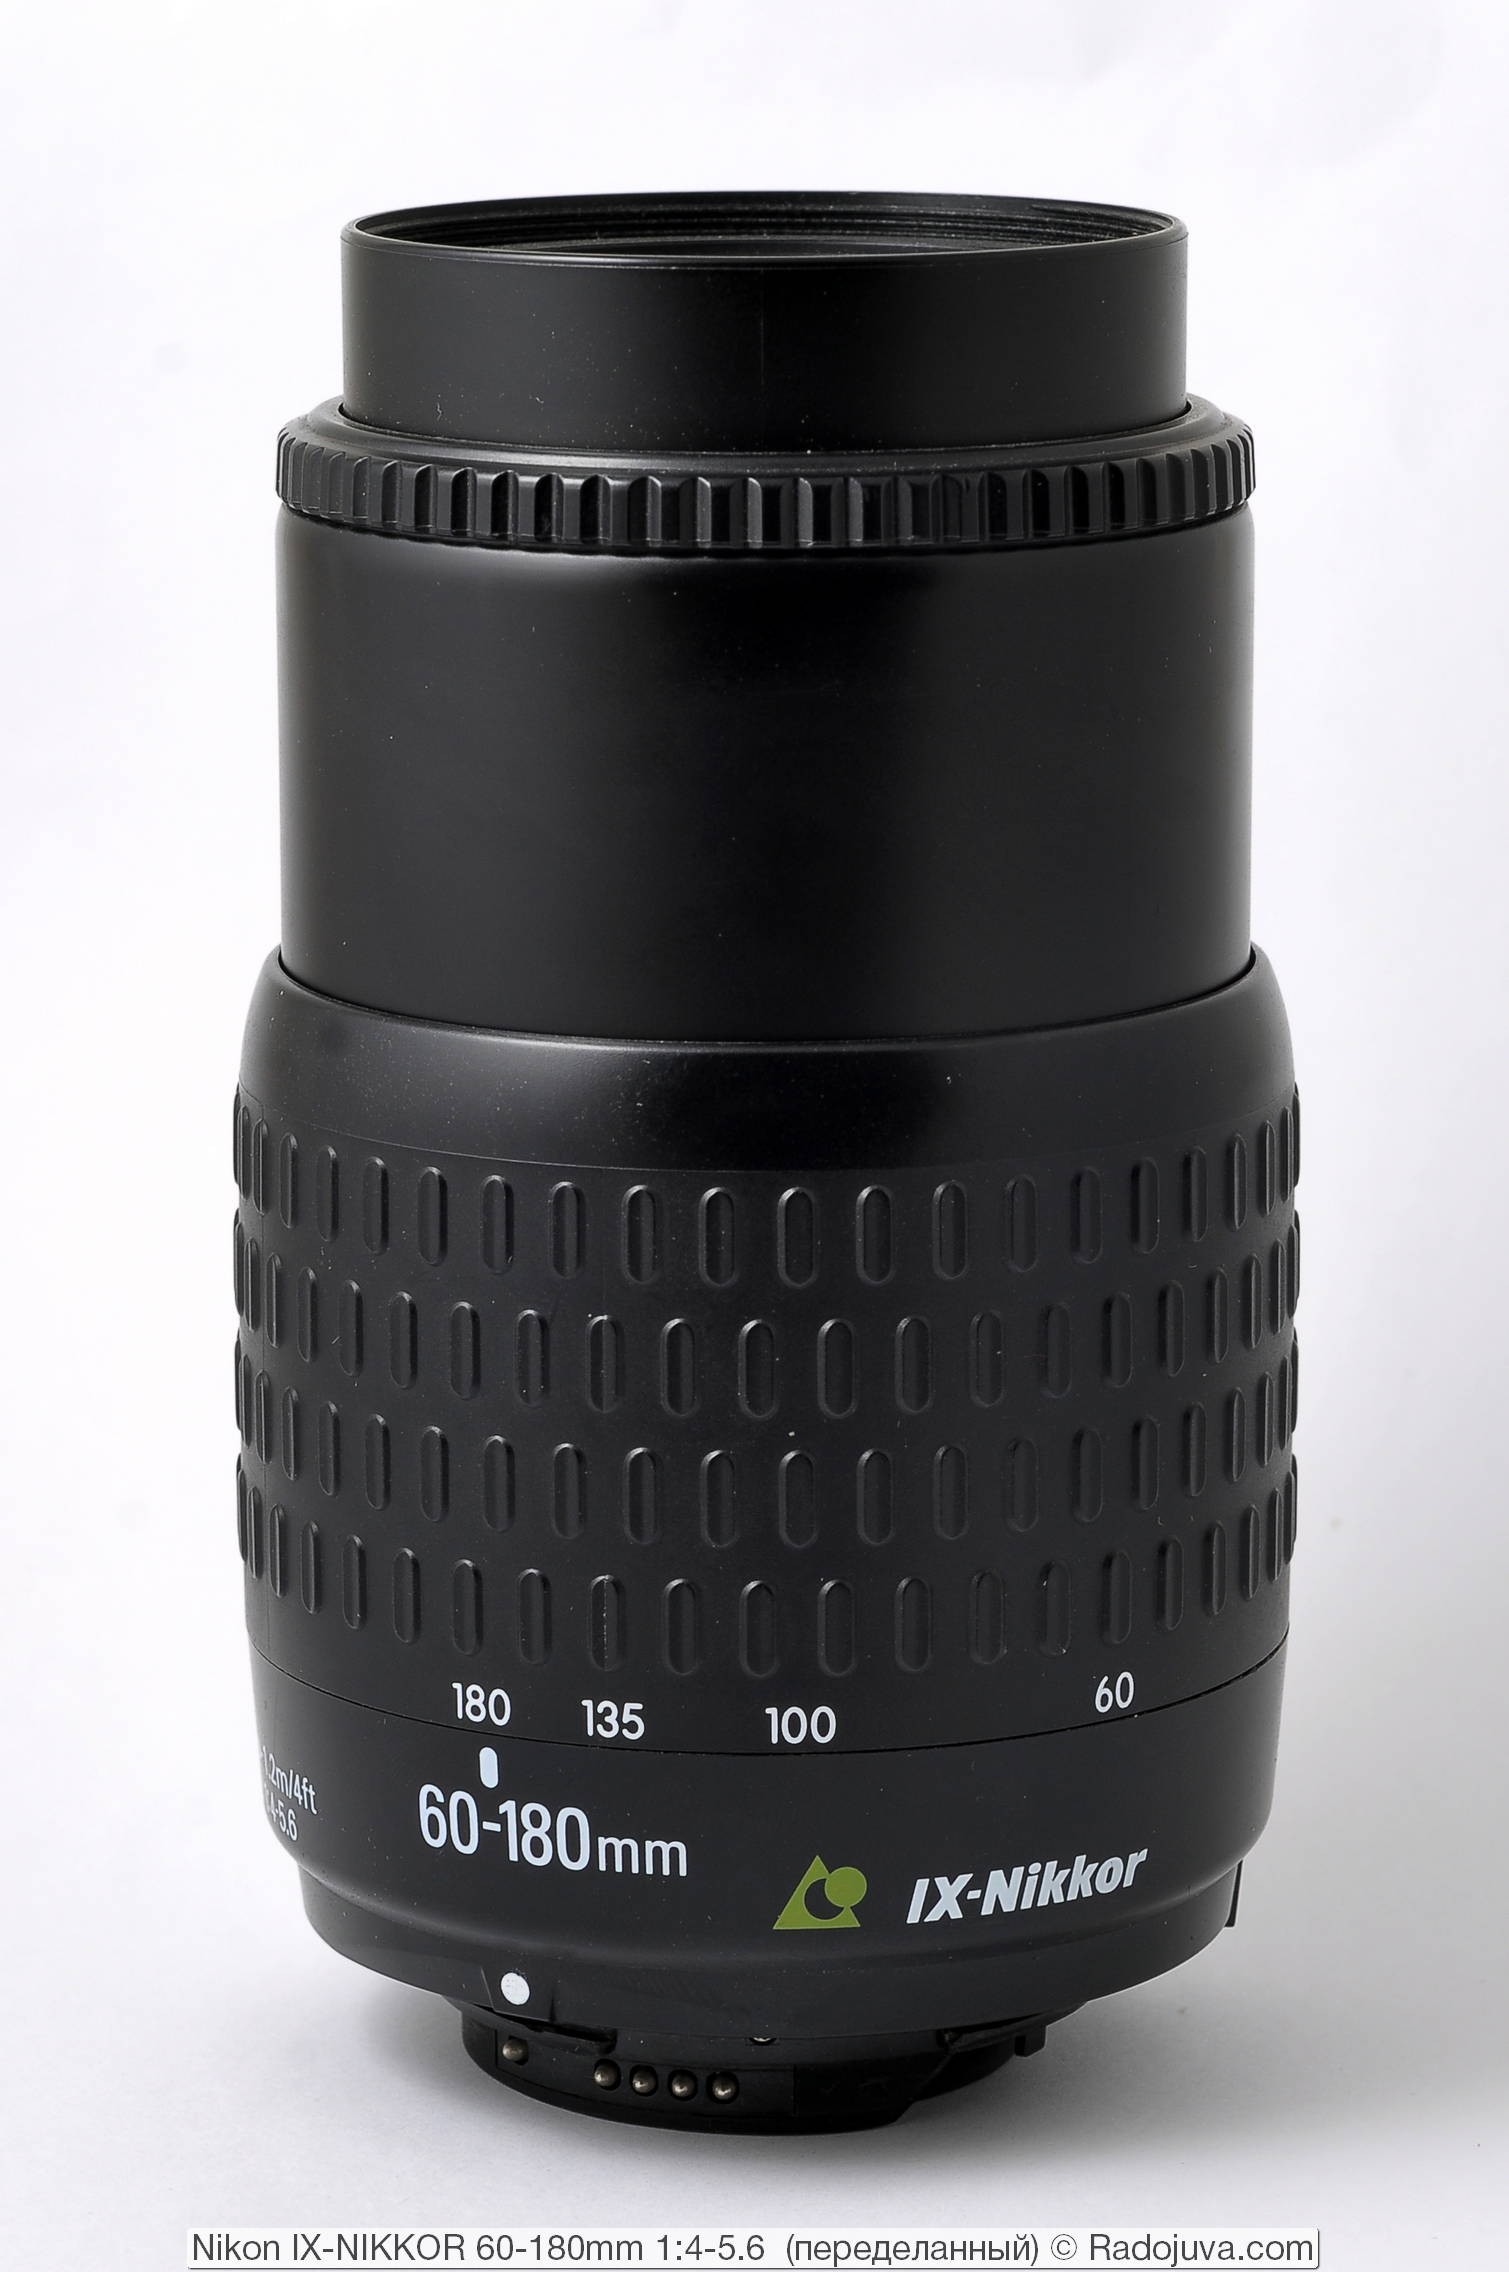 Nikon IX-NIKKOR 60-180mm 1:4-5.6